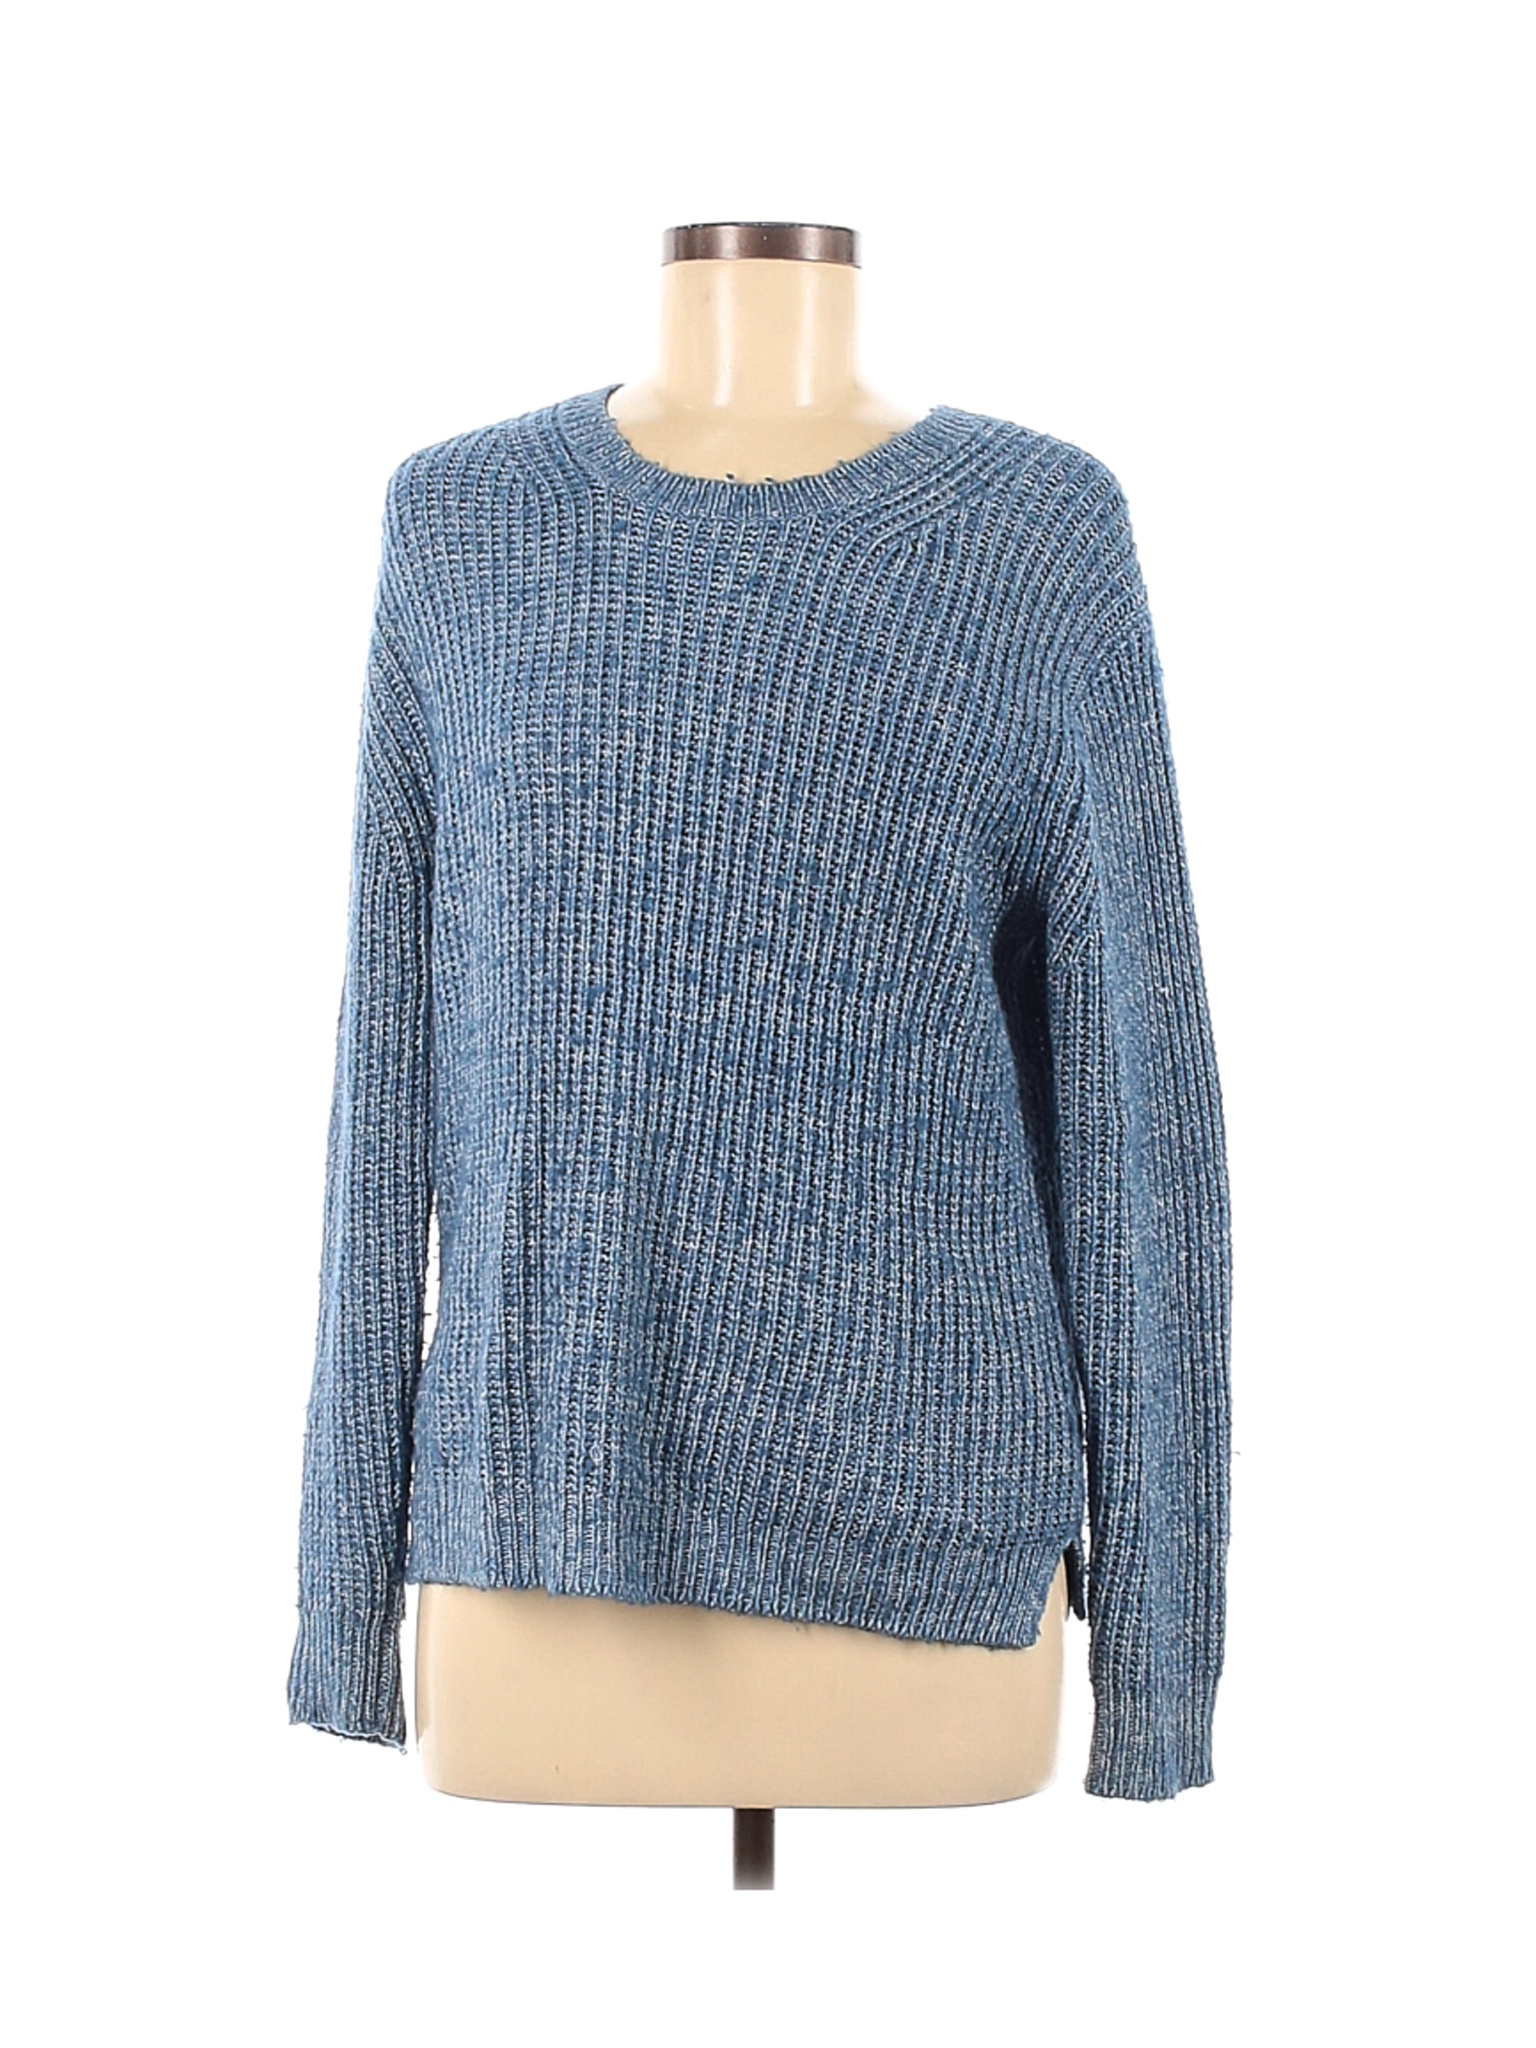 Uniqlo Color Block Blue Pullover Sweater Size M - 59% off | thredUP